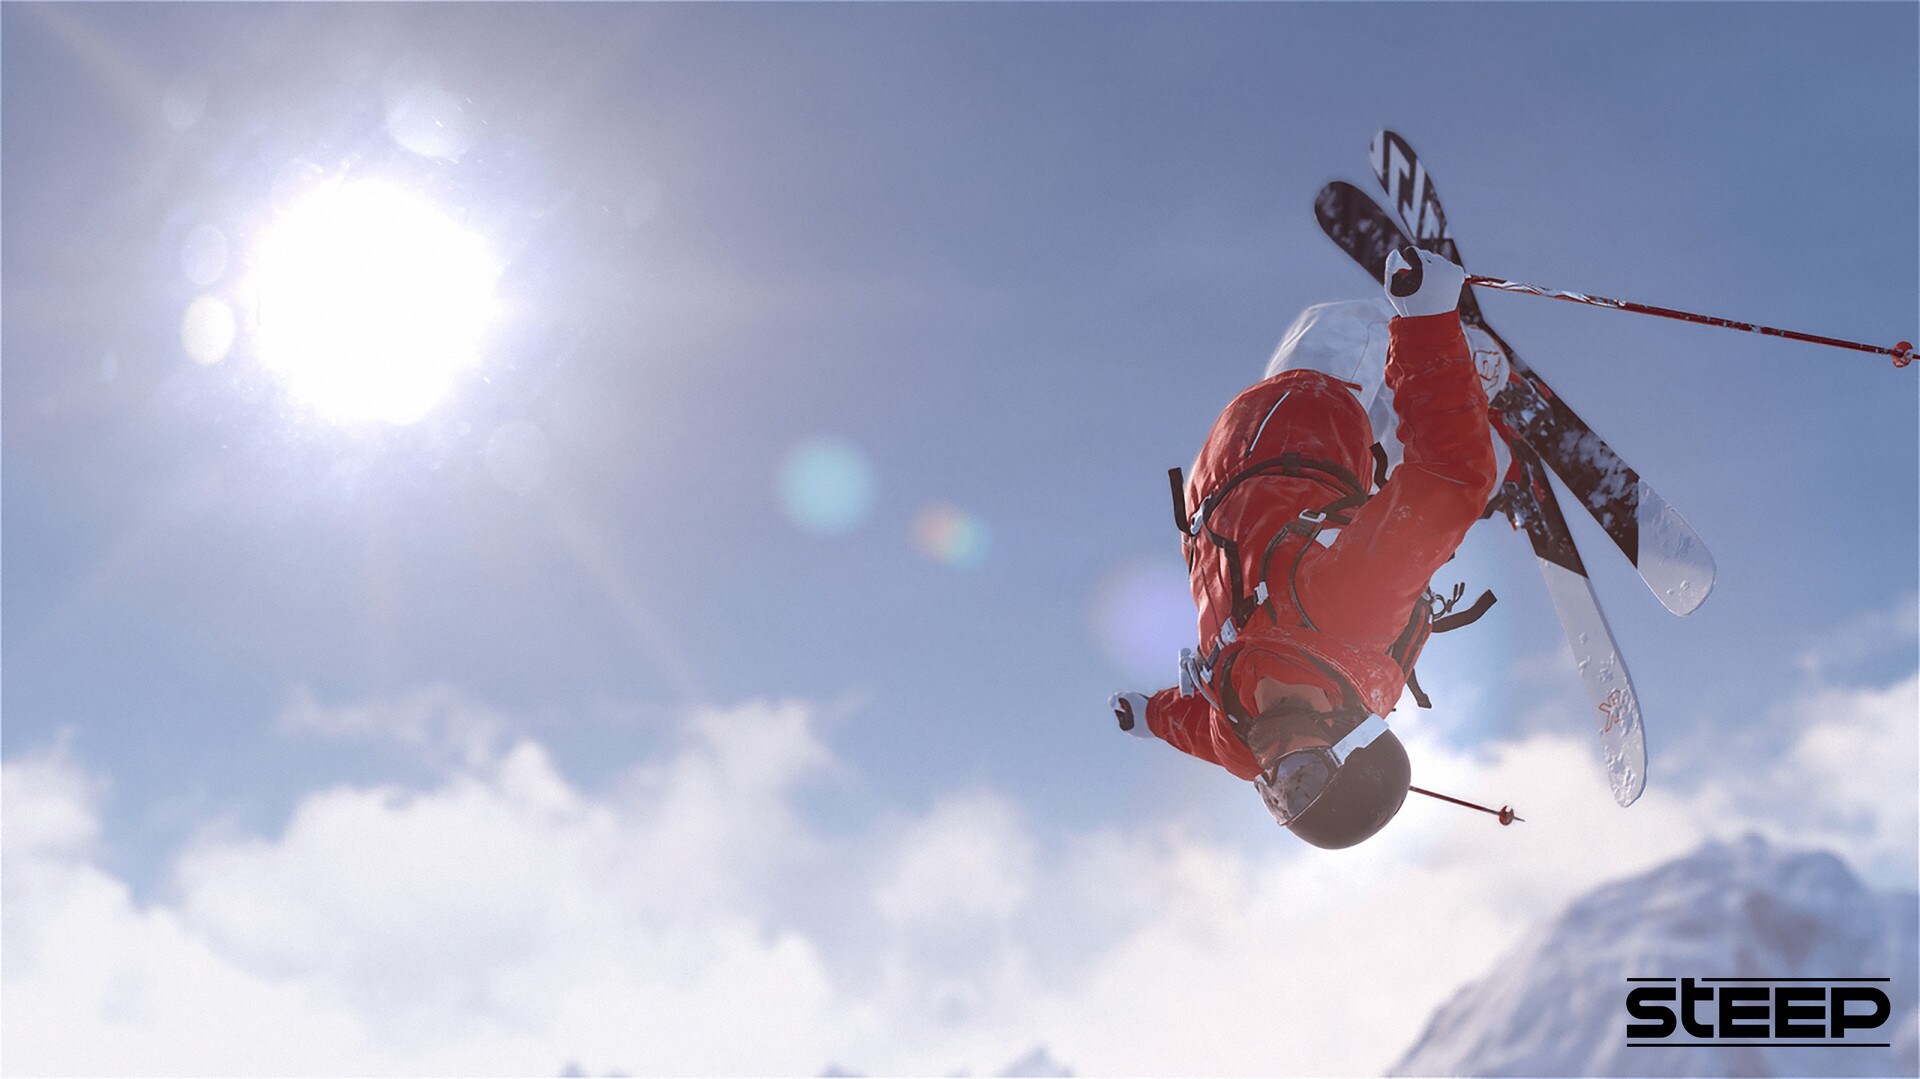 Steep Pc Buy Steam Game Key - snowboard jump v07 roblox